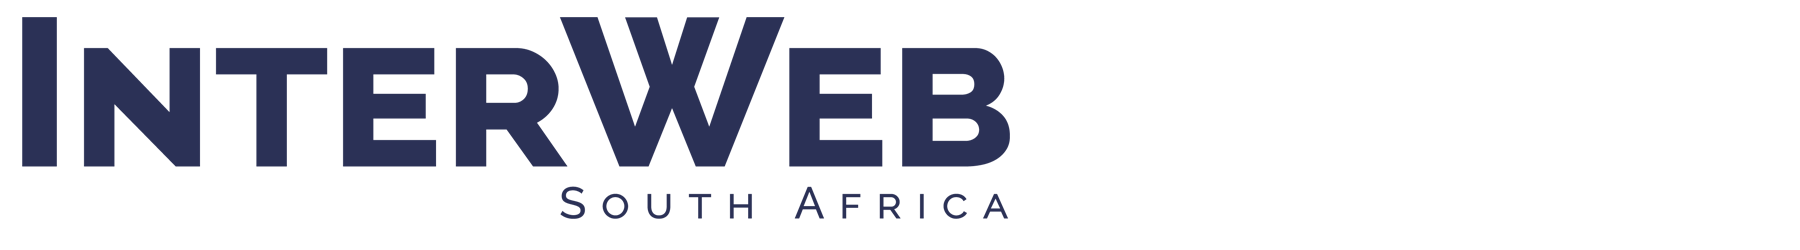 InterWeb SA .co.za Domains and Web Hosting Logo